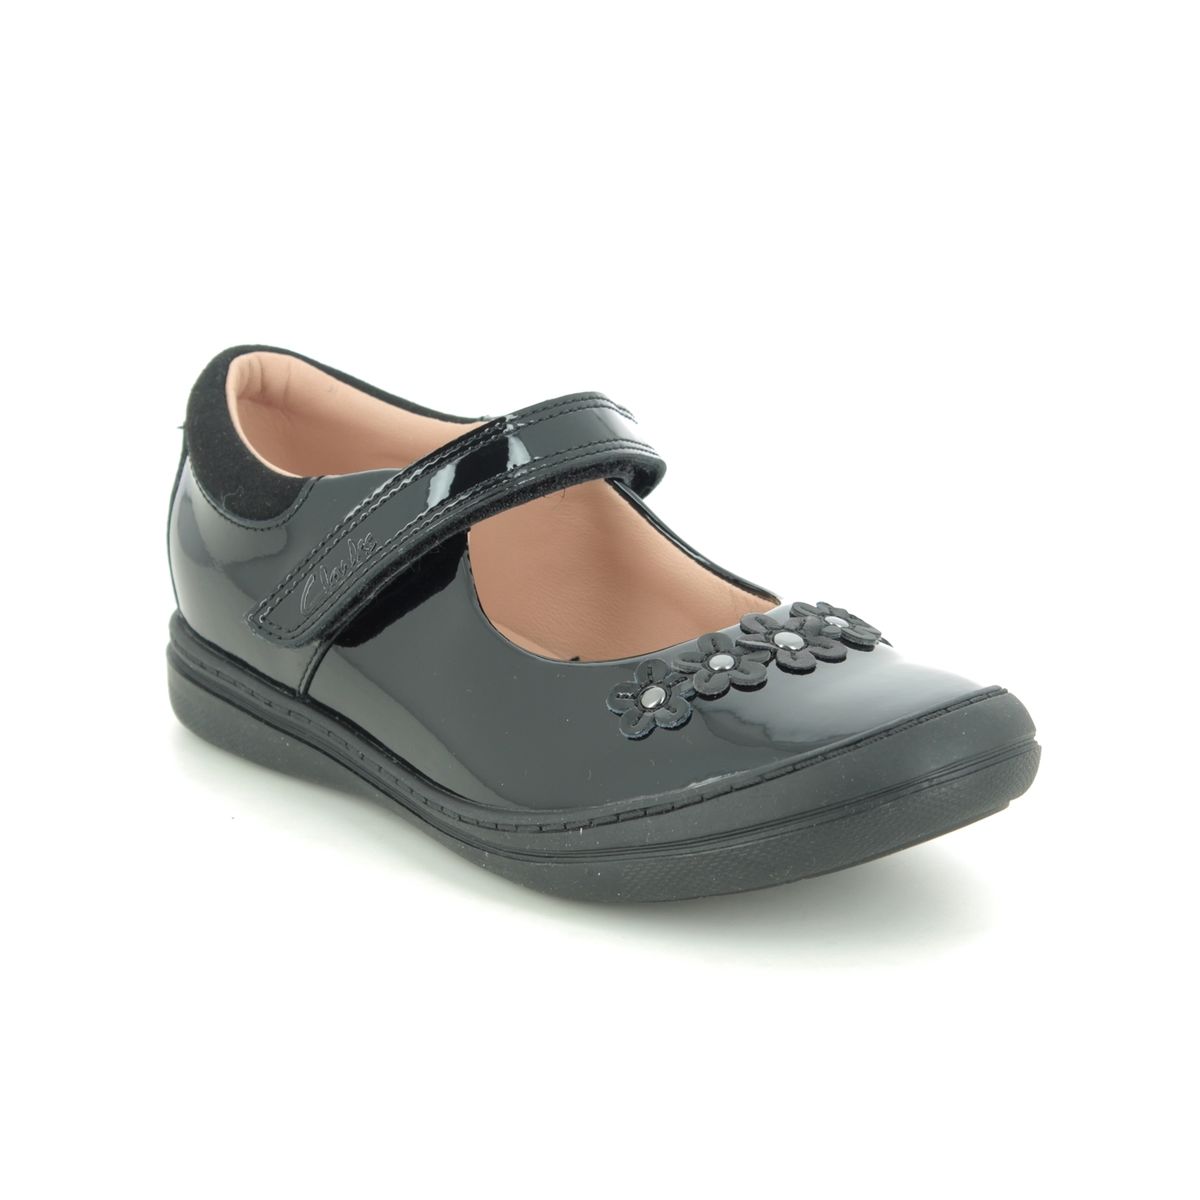 School Shoes Clarks | lupon.gov.ph